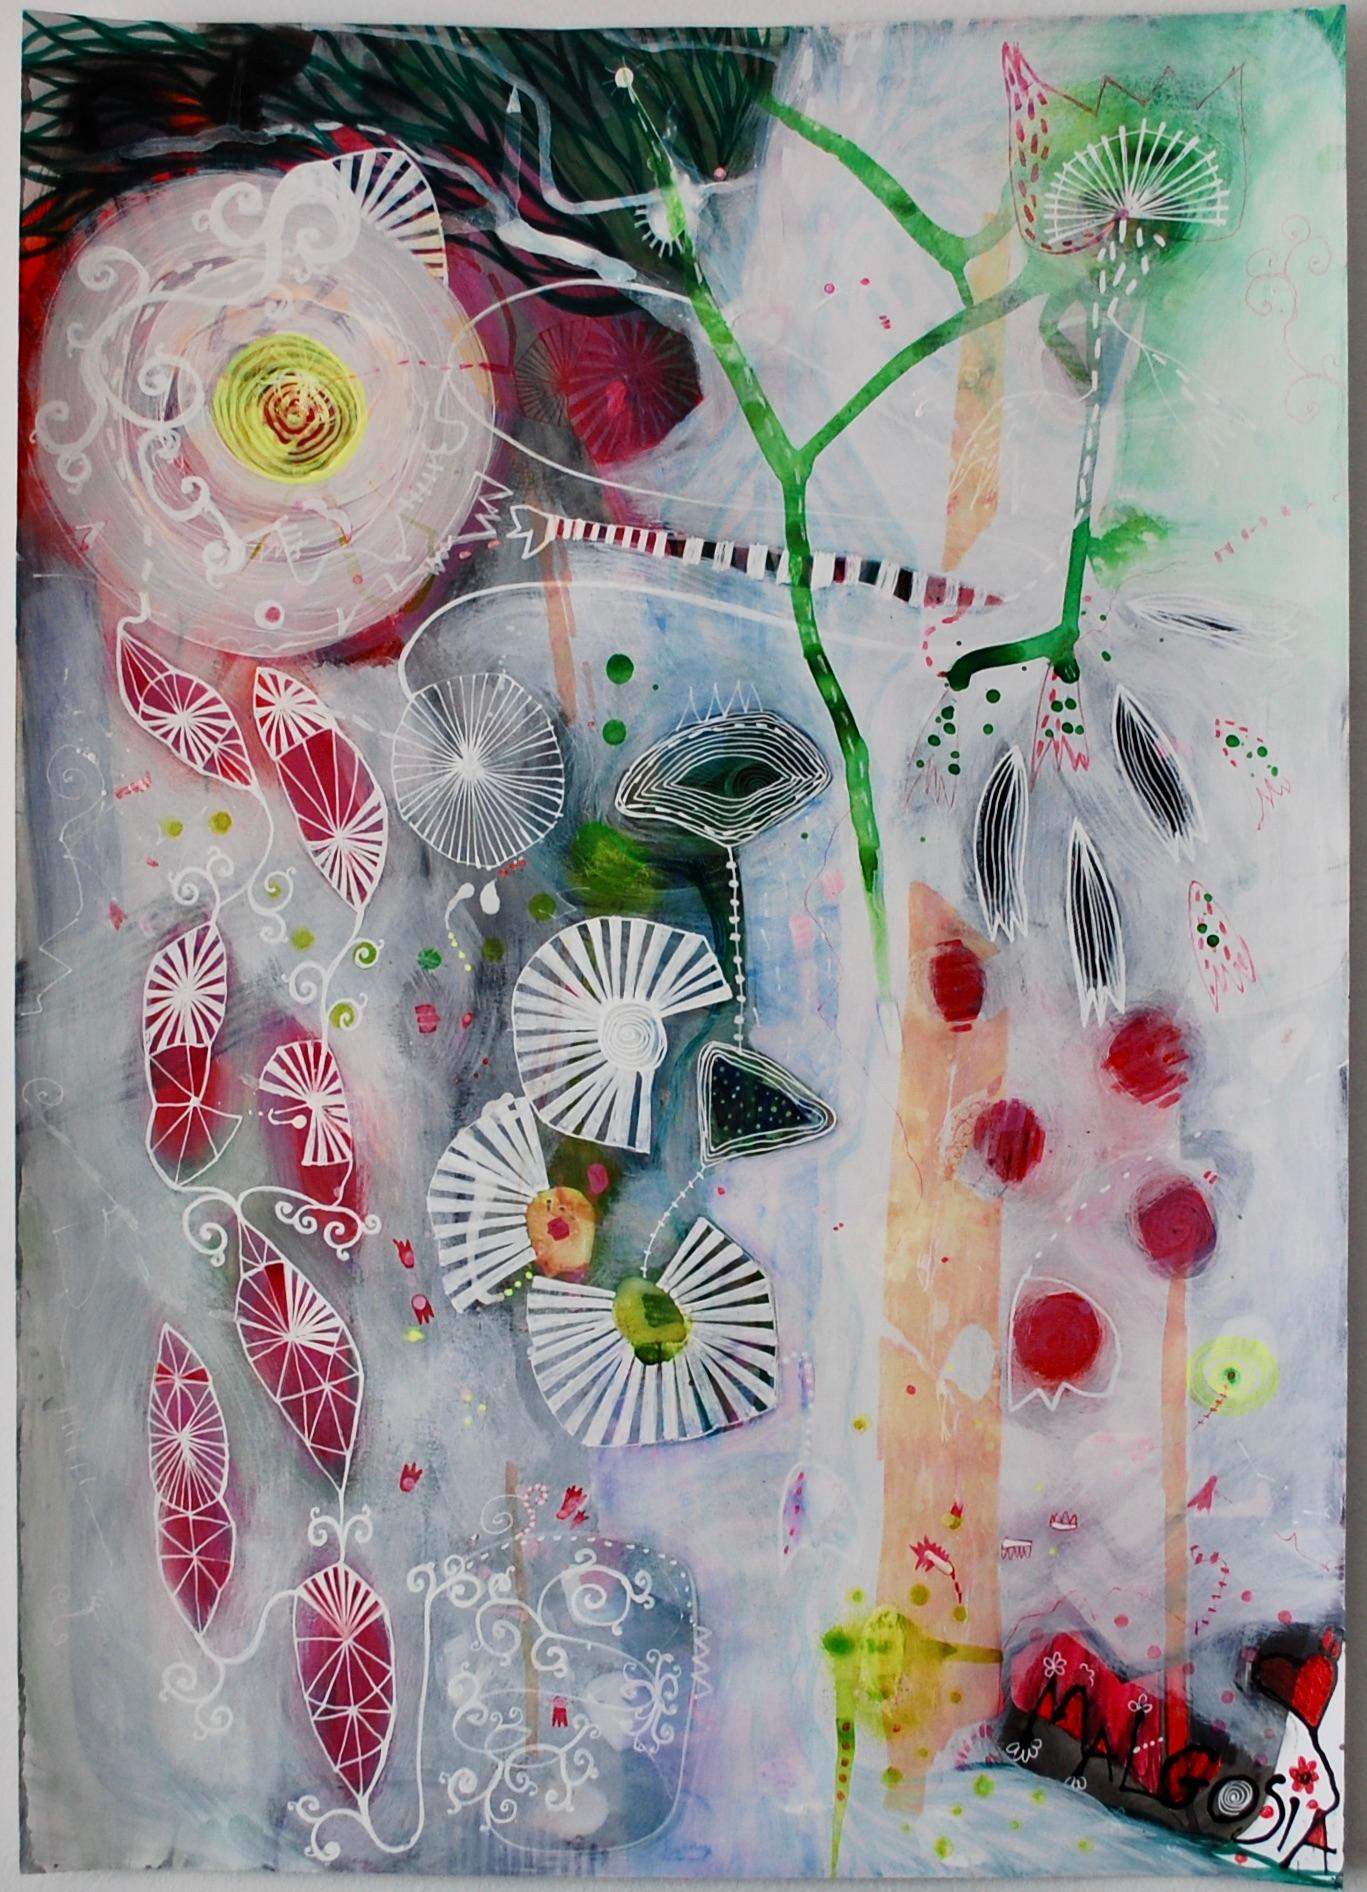 Malgosia Kiernozycka Abstract Painting - Wild Strawberries Mixed Media on Paper